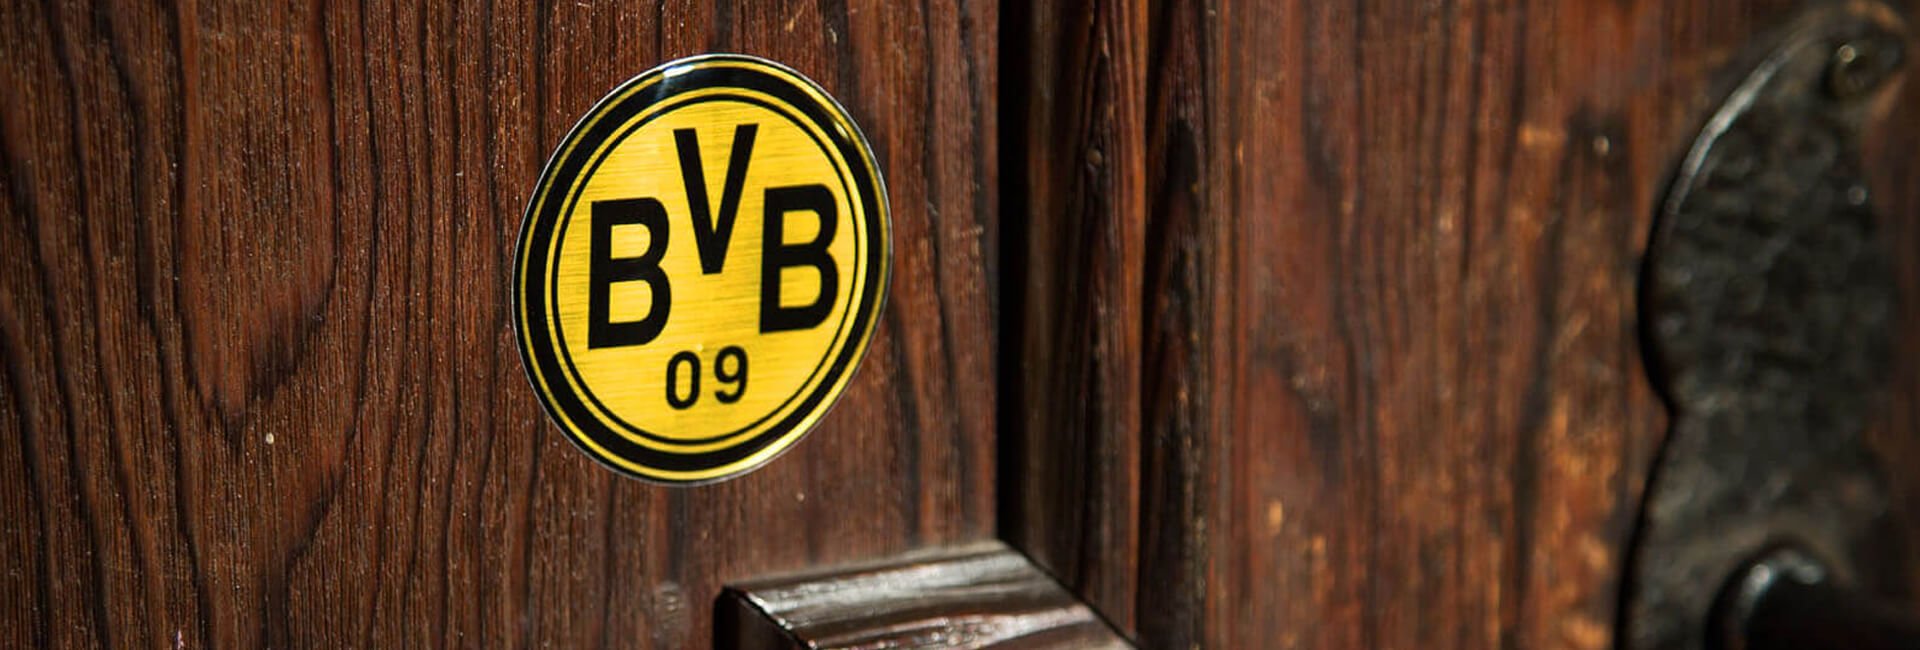 Pins Butterfly Anstecker BVB Borussia Dortmund Kollektion 2014/15 Set Trikot Sky 